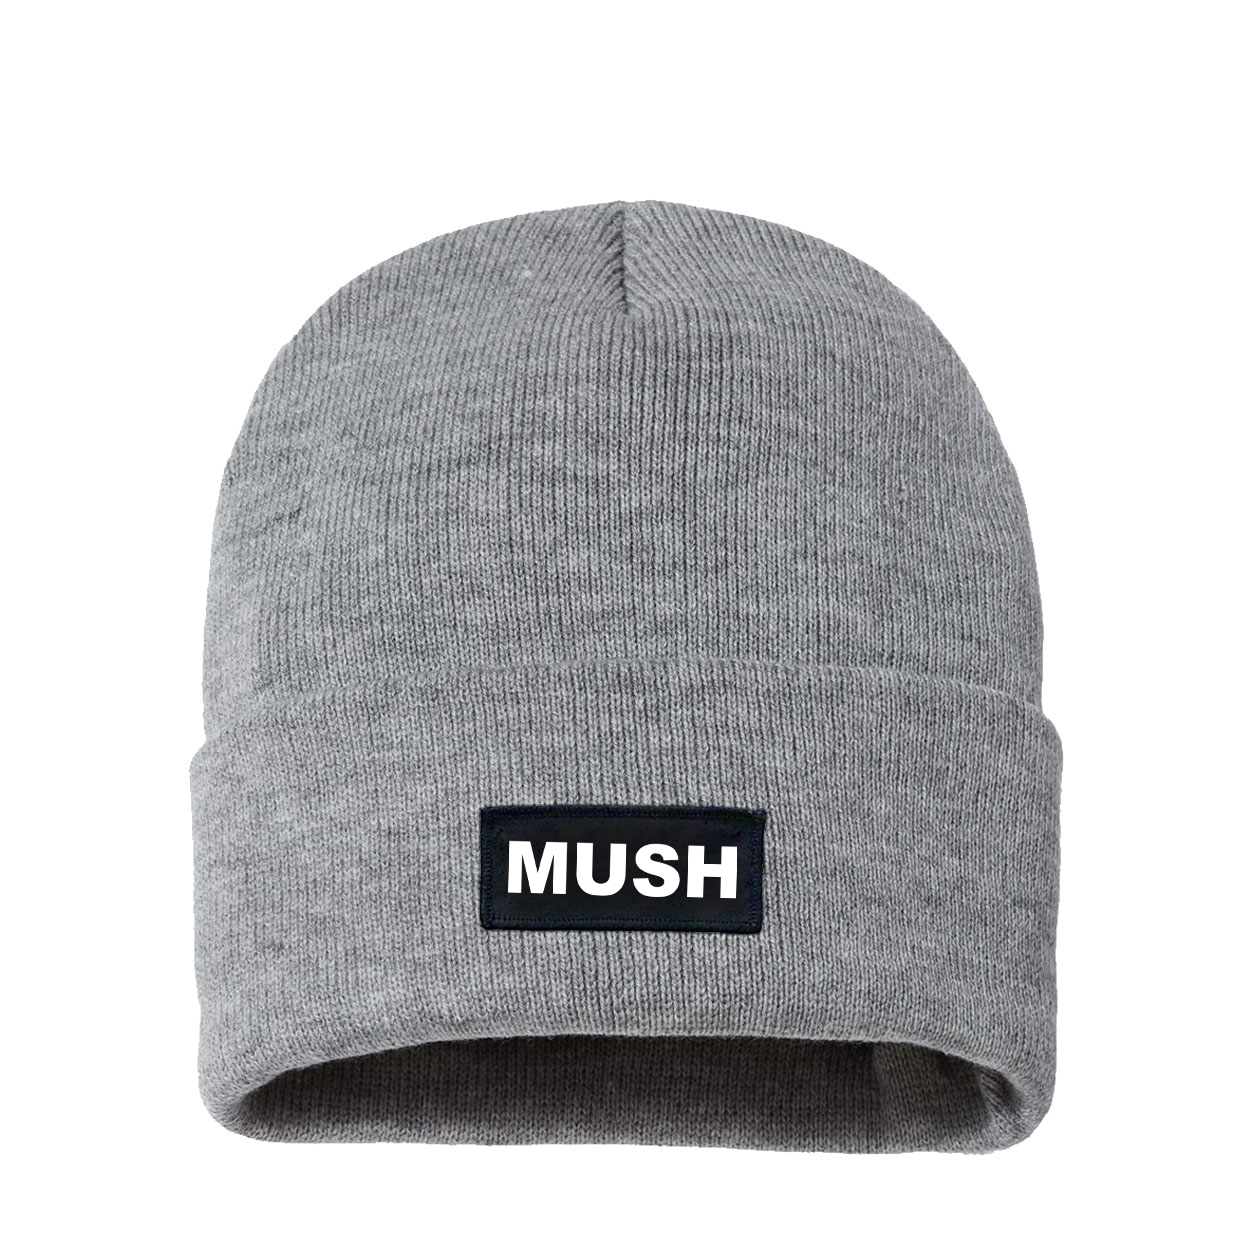 Mush Brand Logo Night Out Woven Patch Sherpa Lined Cuffed Beanie Heather Gray